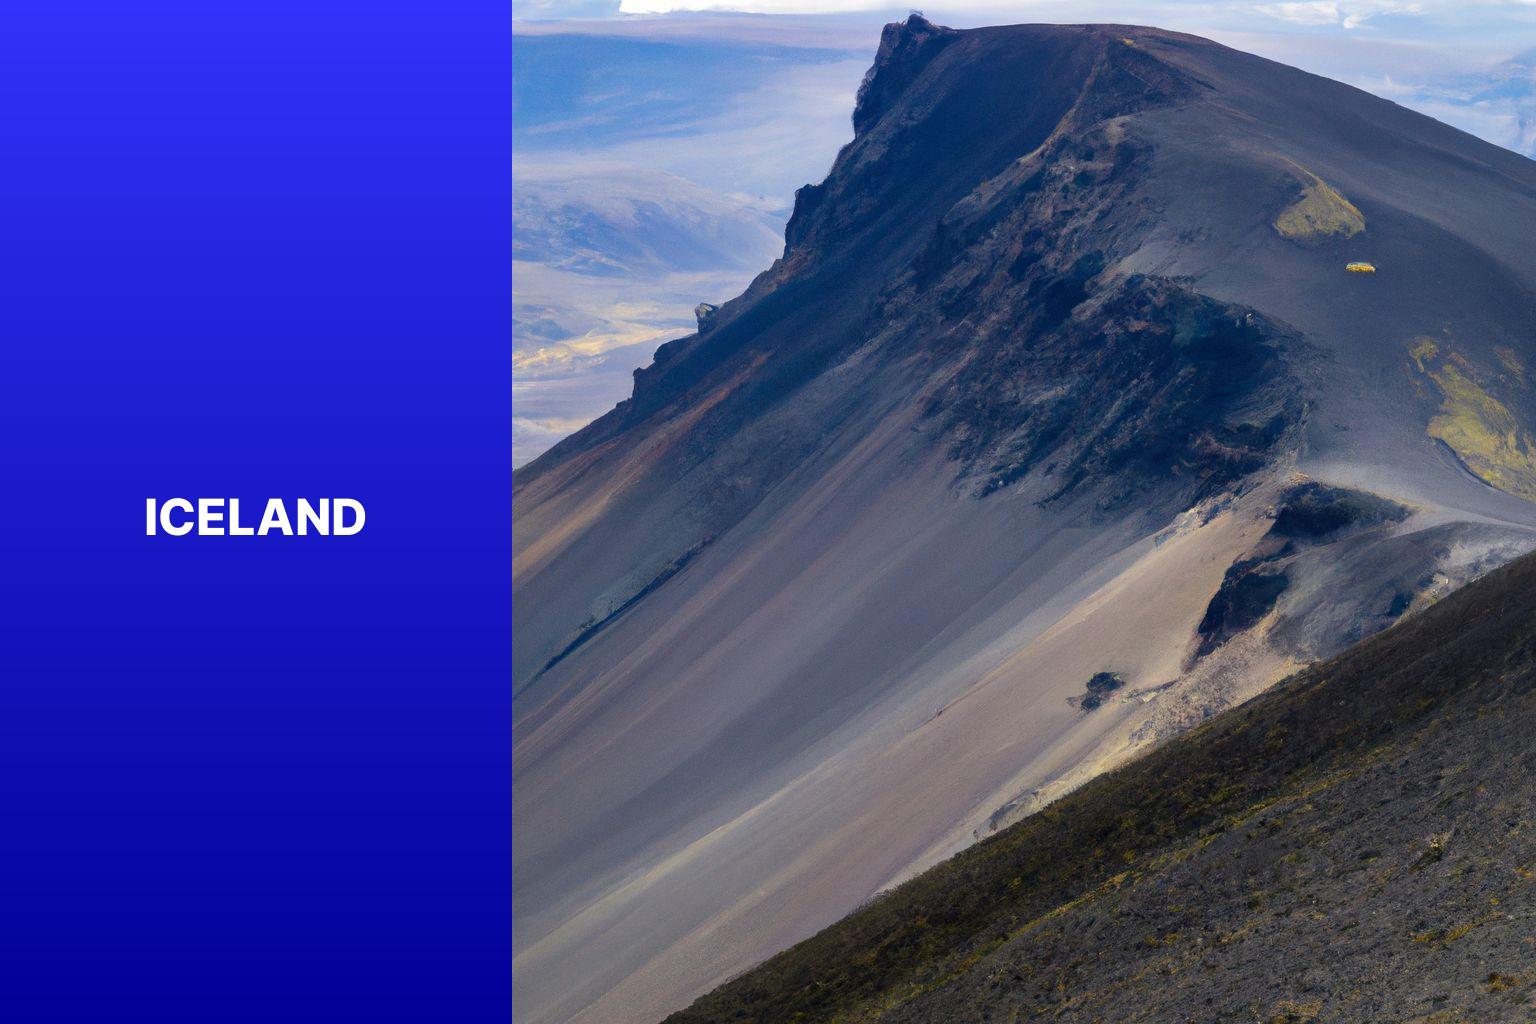 Iceland - Top 10 Destinations for Men